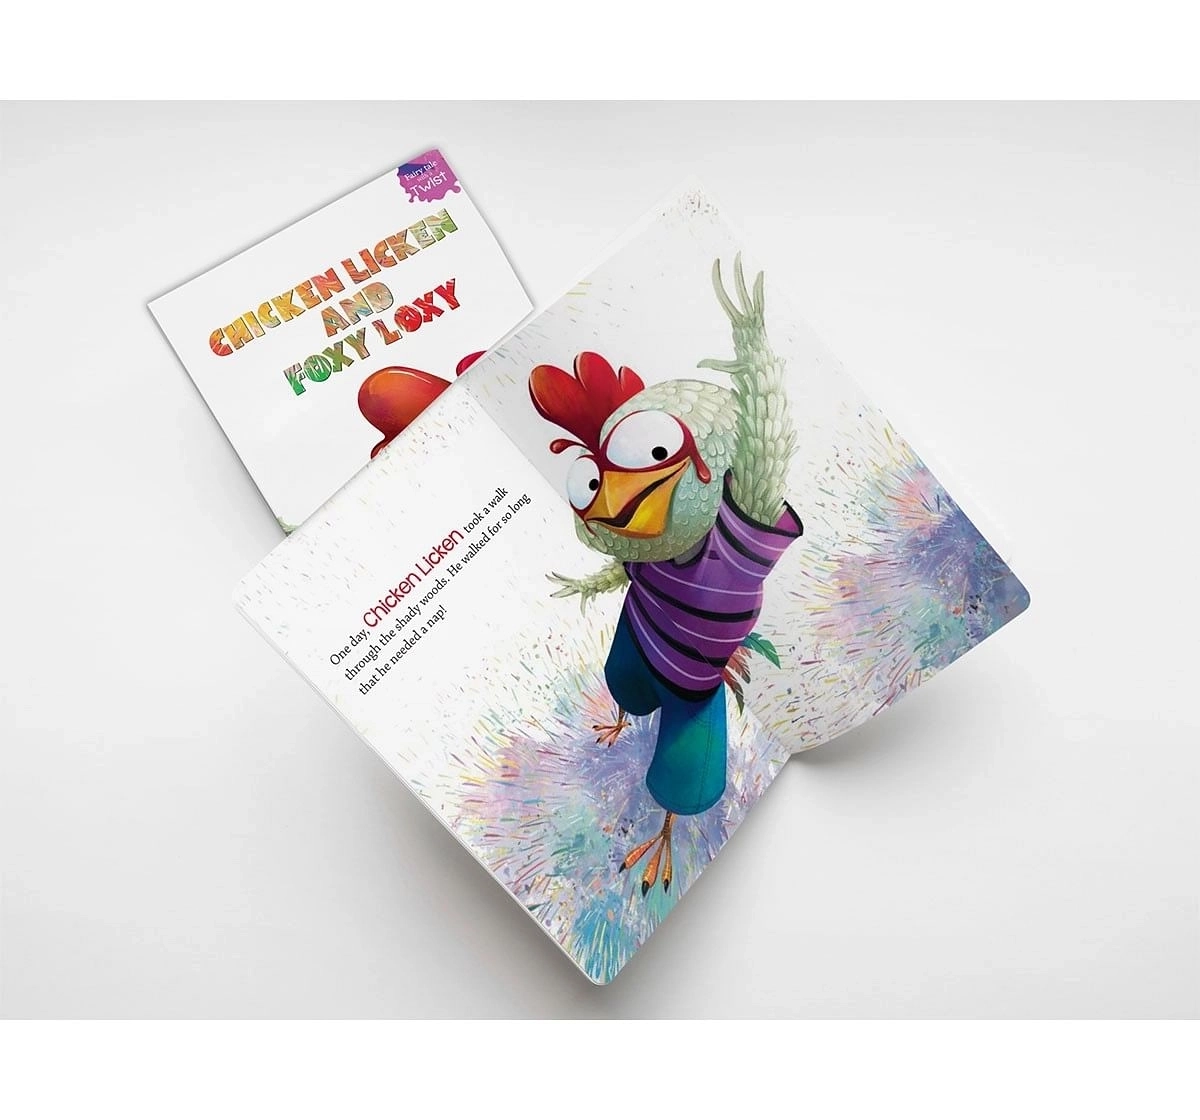 Wonder House Books Chicken licken and foxy loxy Fairytales Paperback Multicolor 3Y+